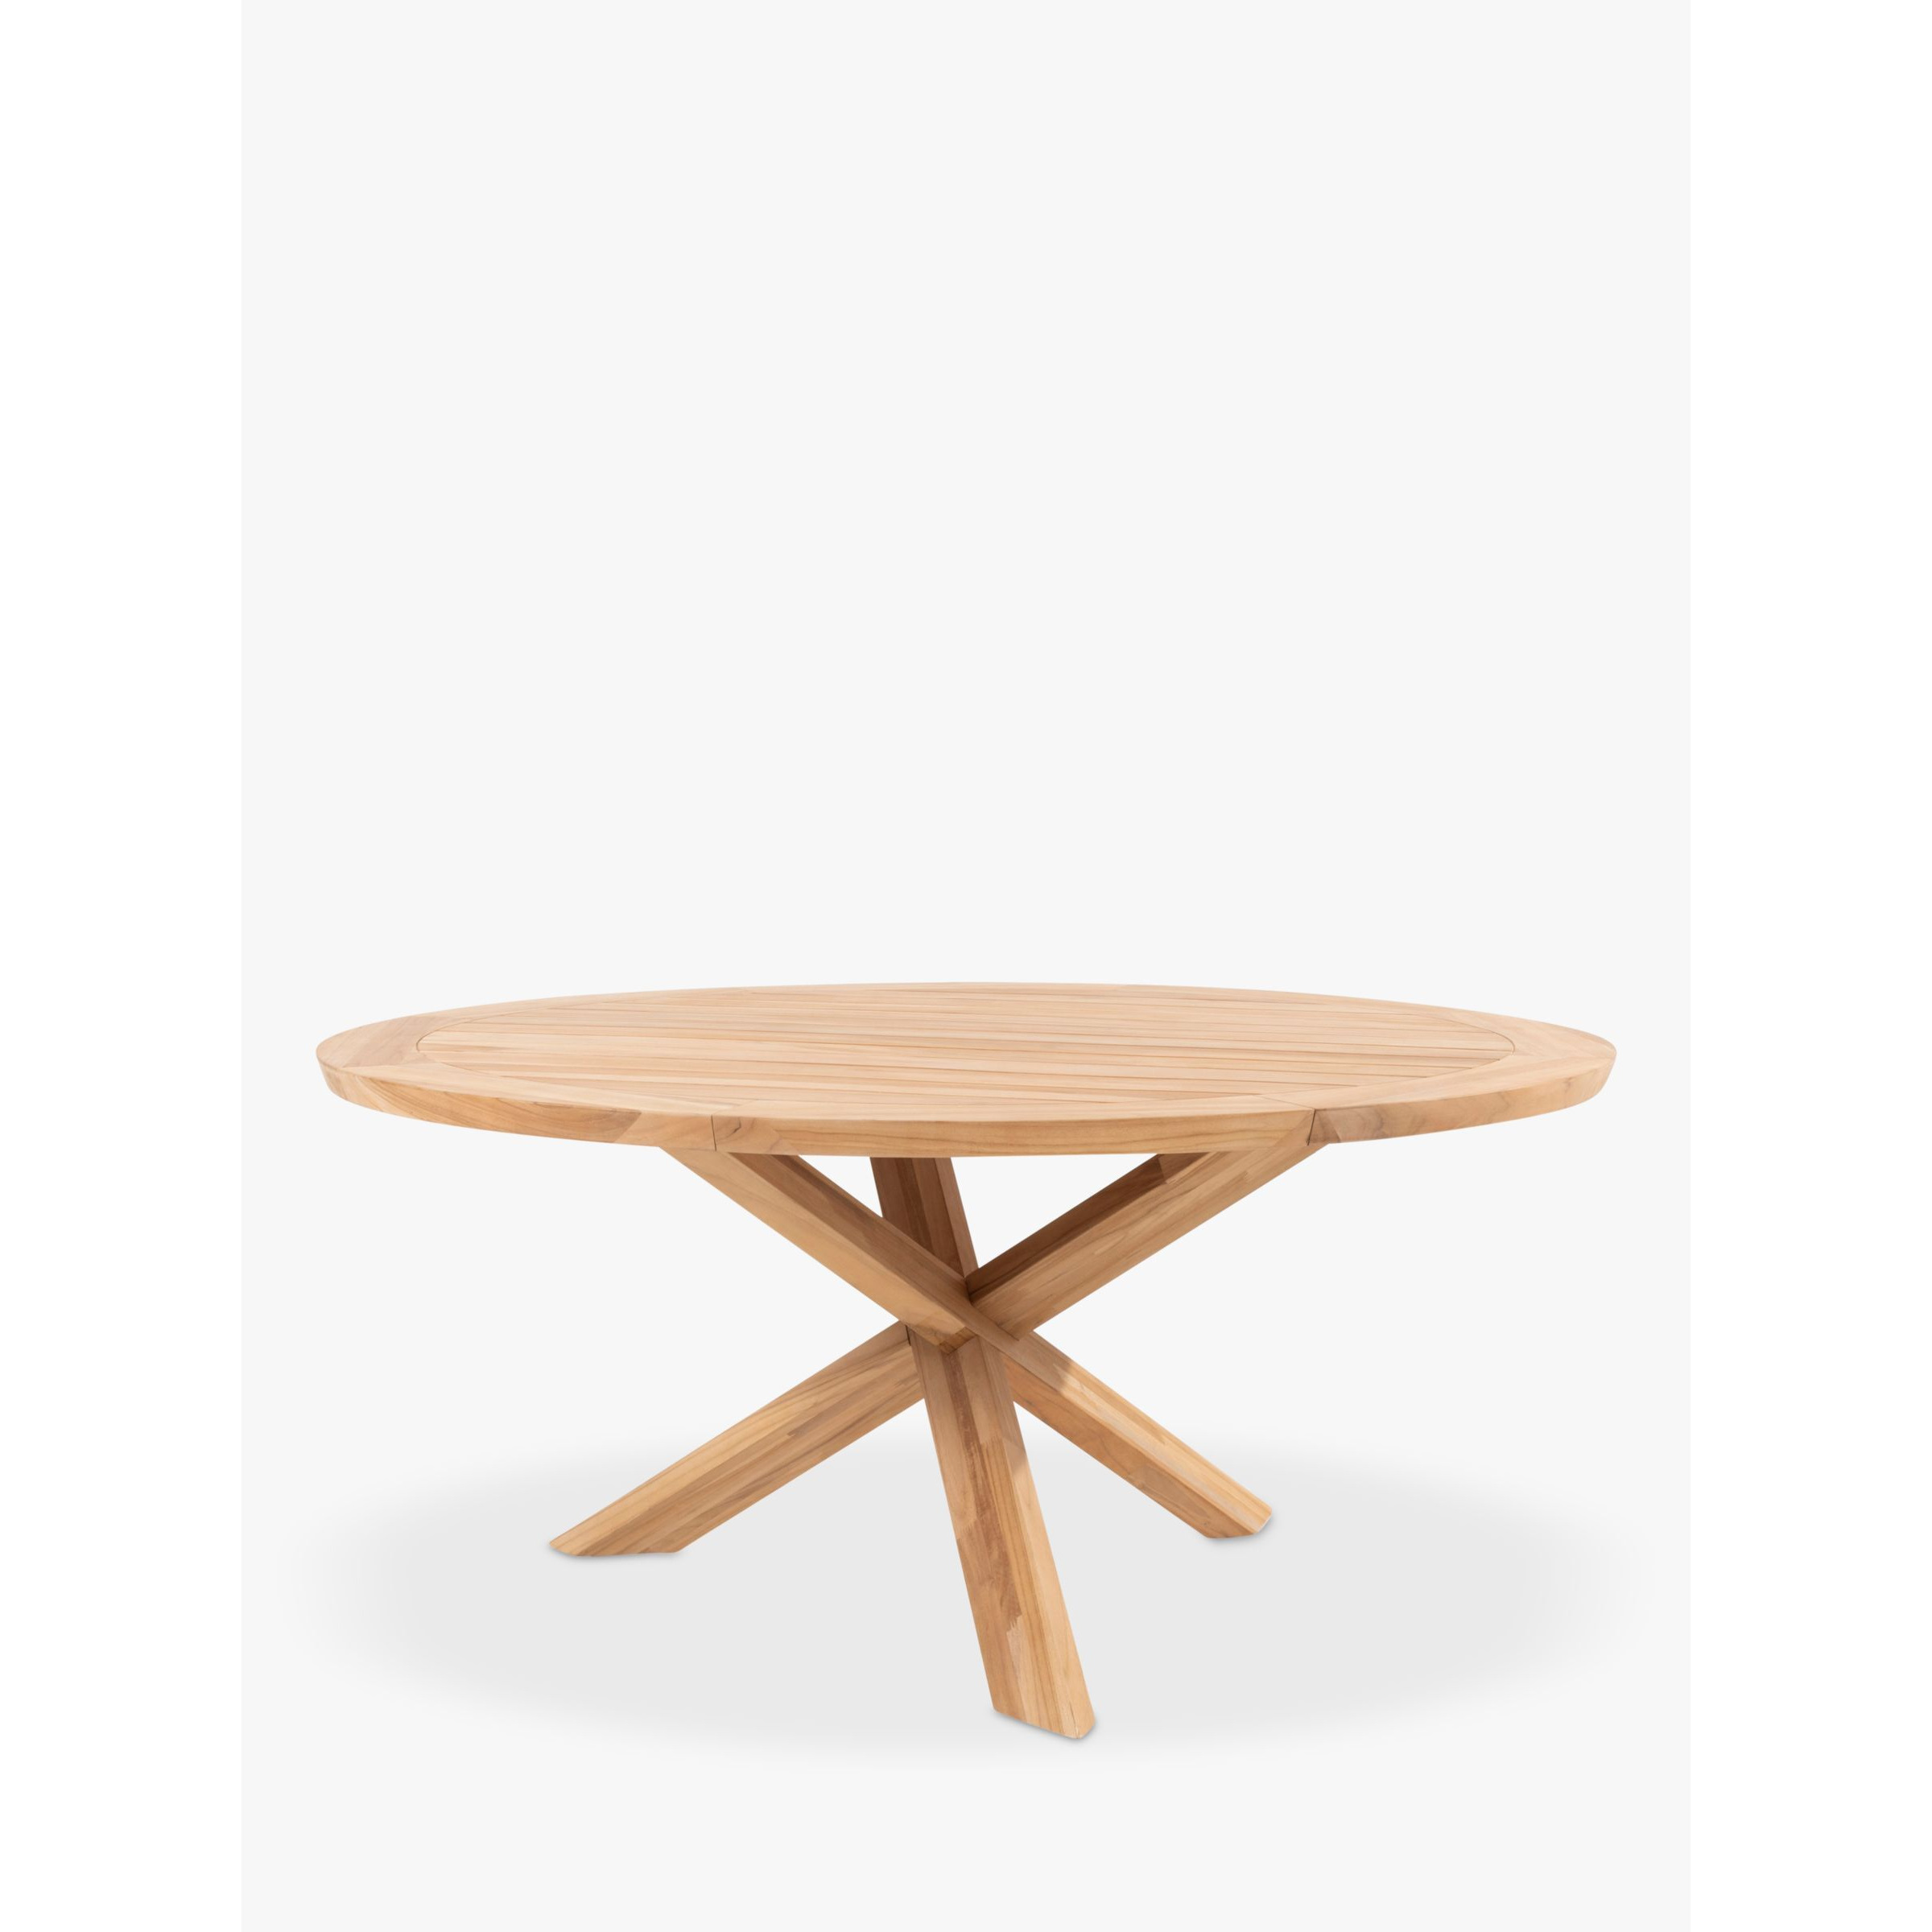 4 Seasons Outdoor Prado Round Garden Dining Table, 160cm, FSC-Certified (Teak Wood), Natural - image 1